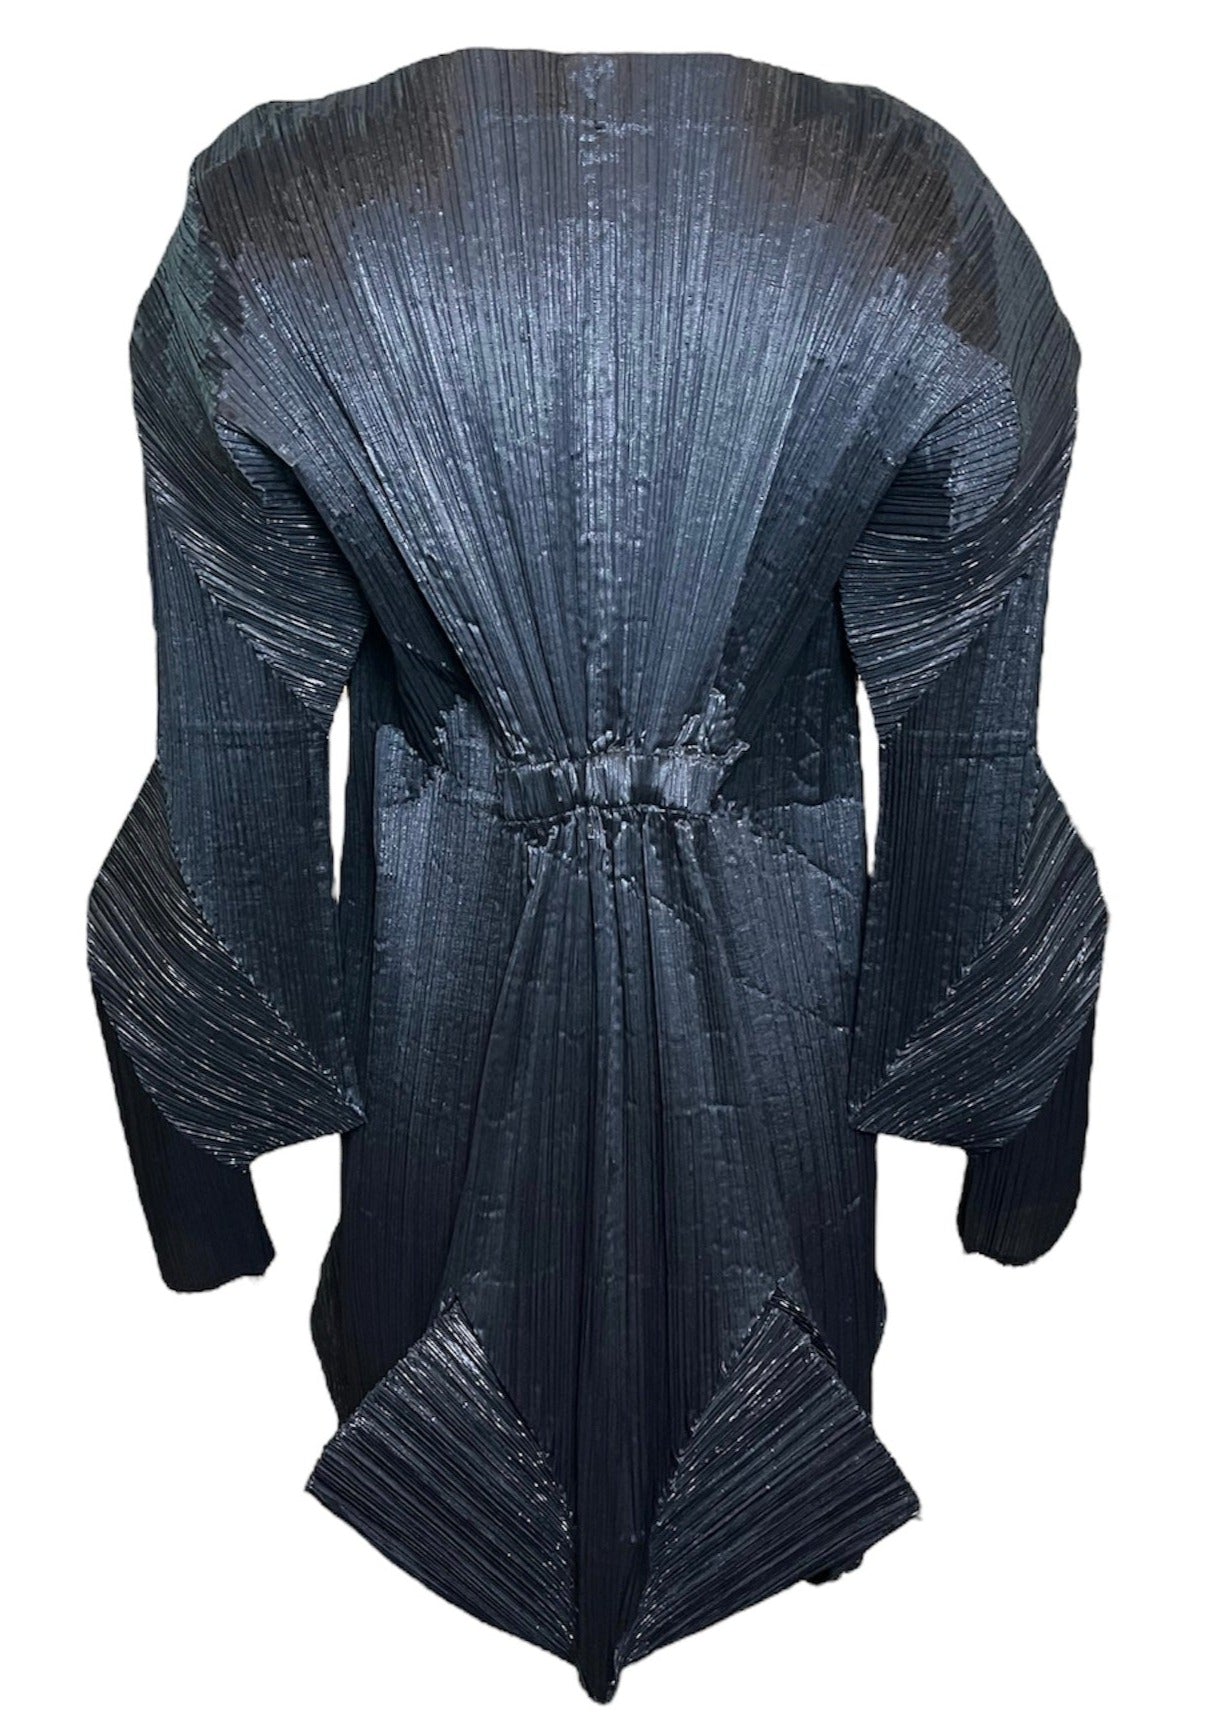  Issey Miyake AW Fall 1994-95  Black Pleated Avant Garde Dress BACK 3 of 5